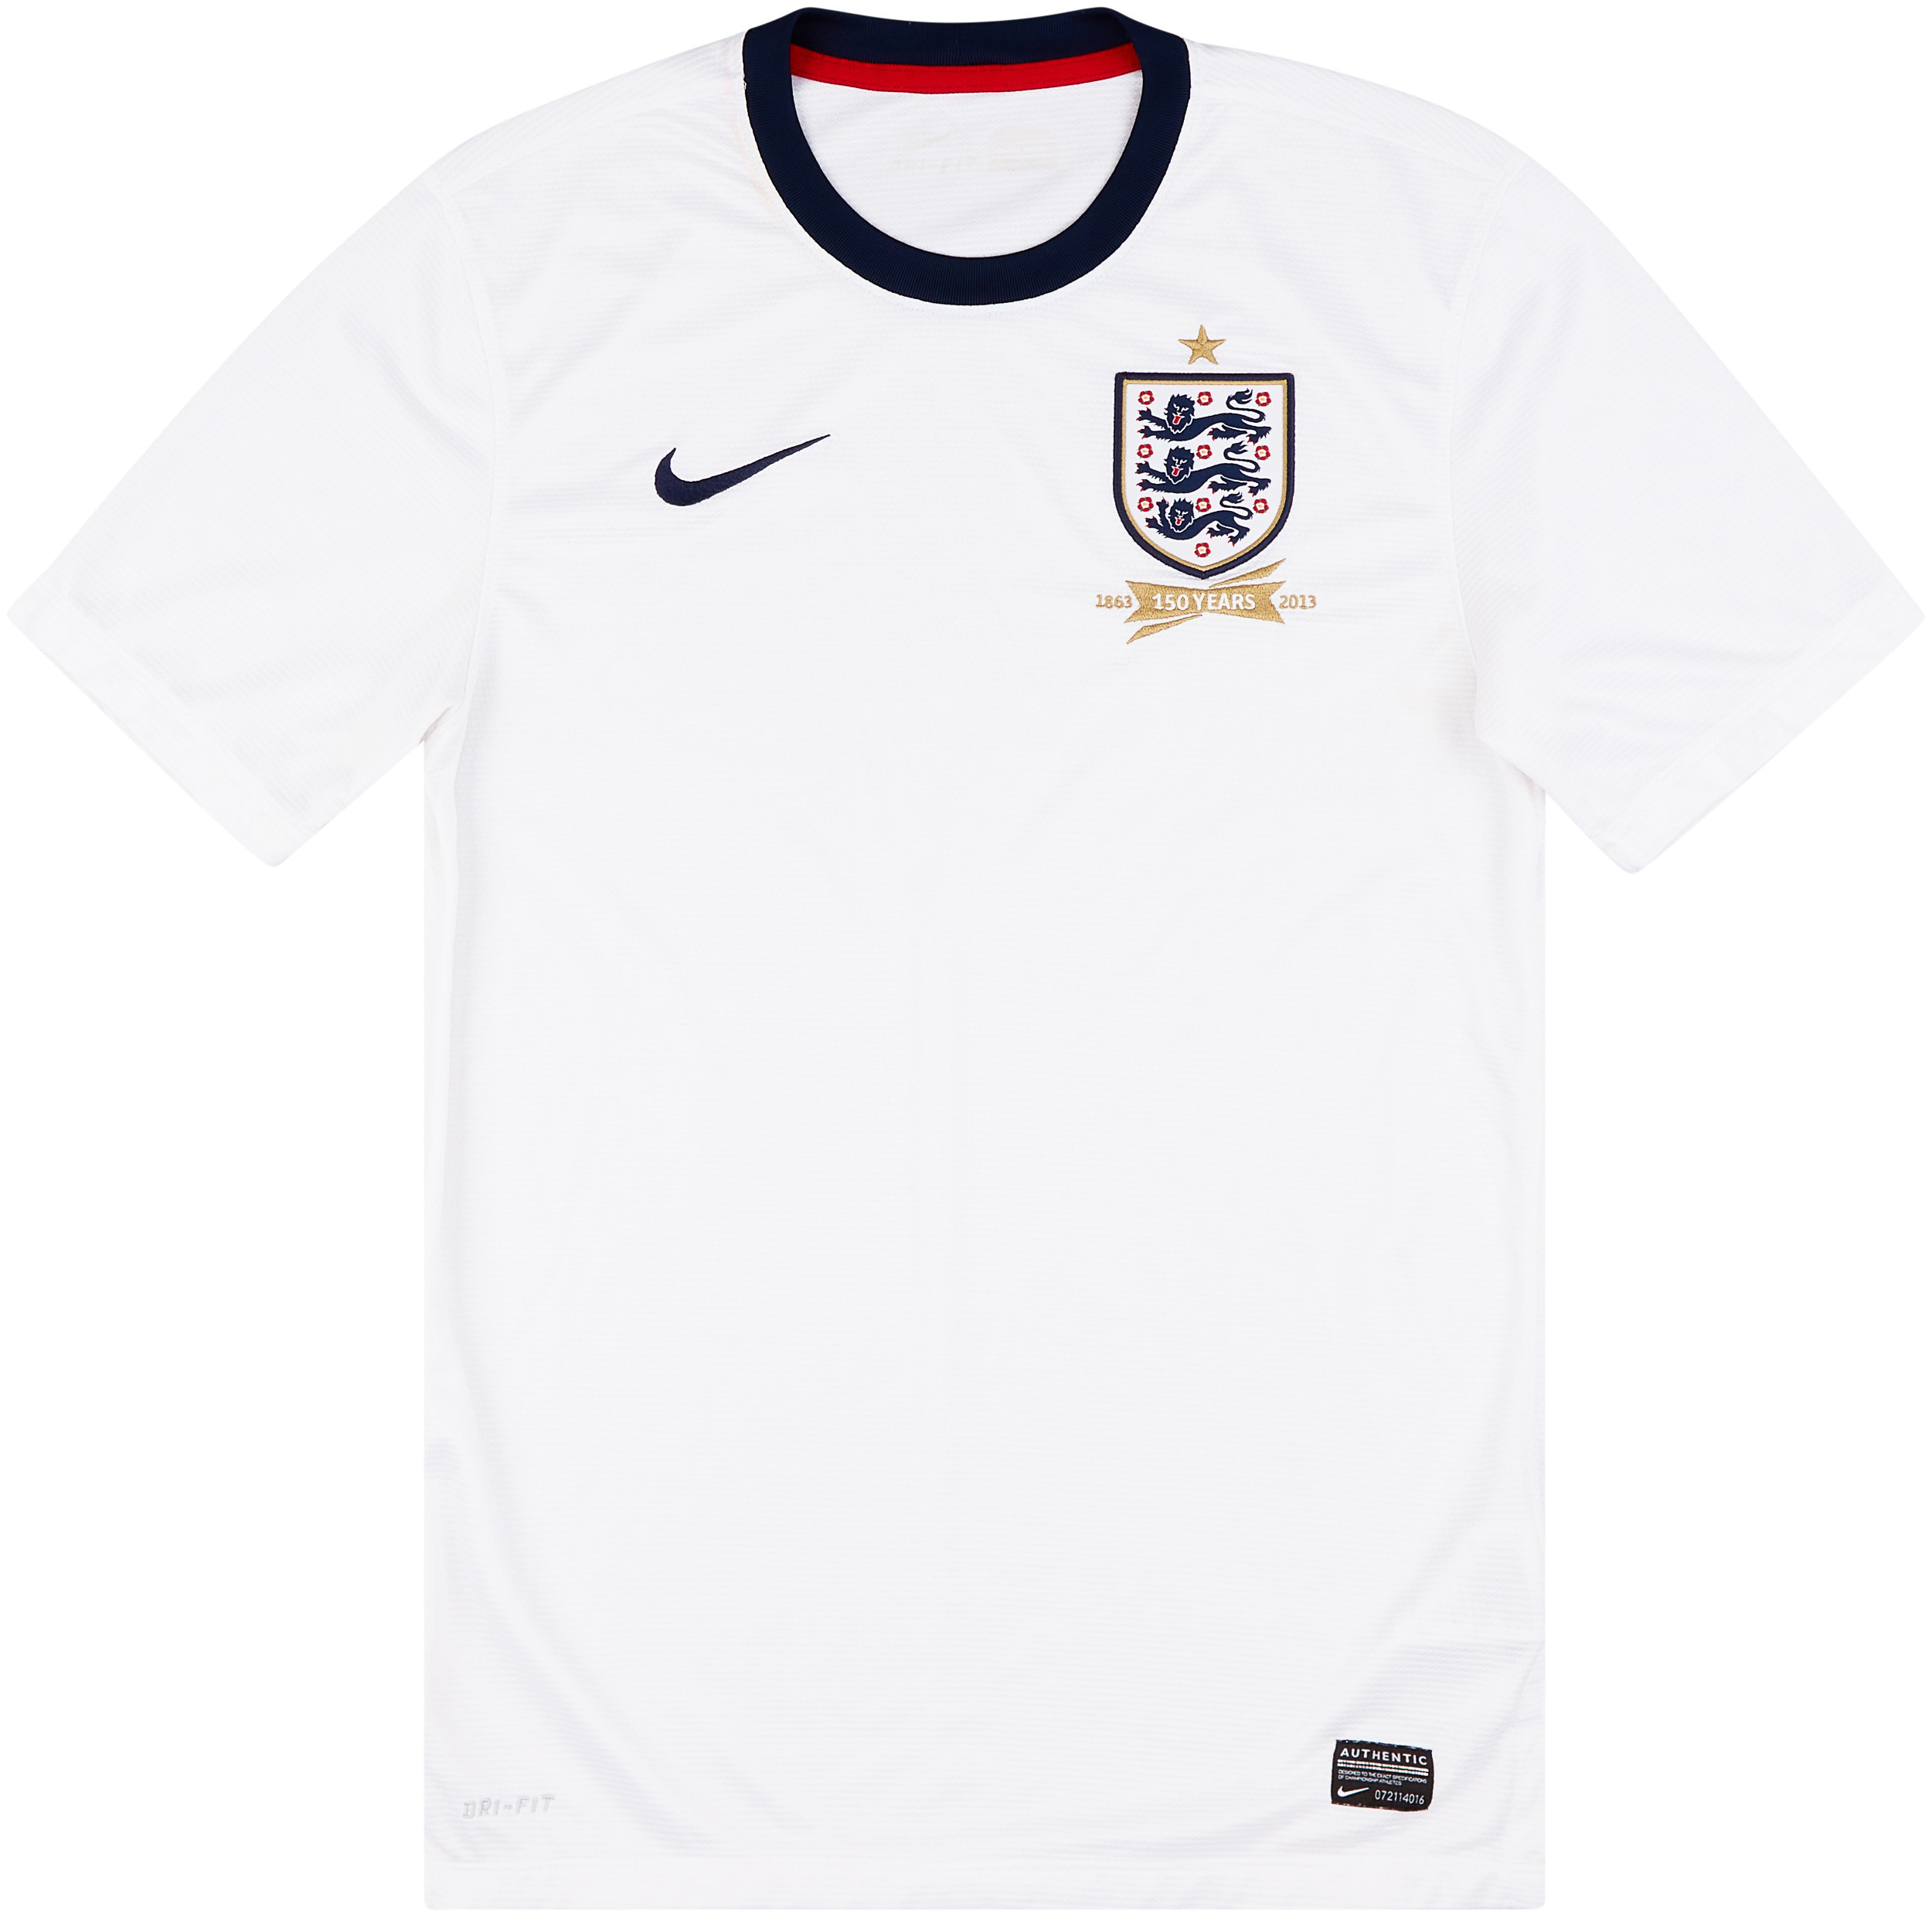 2013 England 150ᵗʰ Anniversary Home Shirt - 8/10 - ()